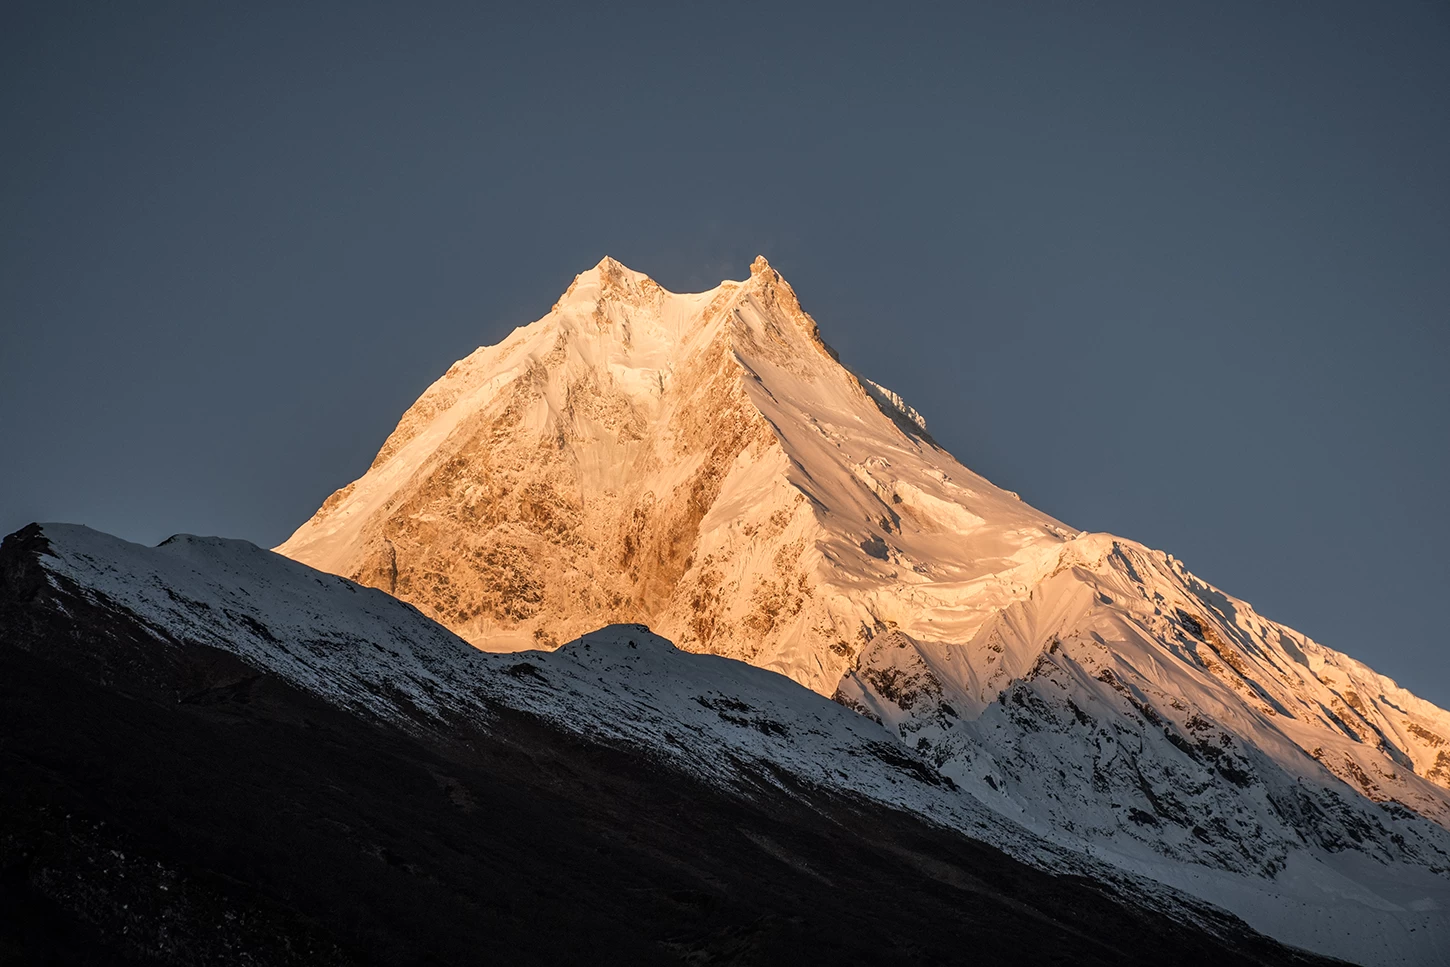  Mount Manaslu, Nepal. 